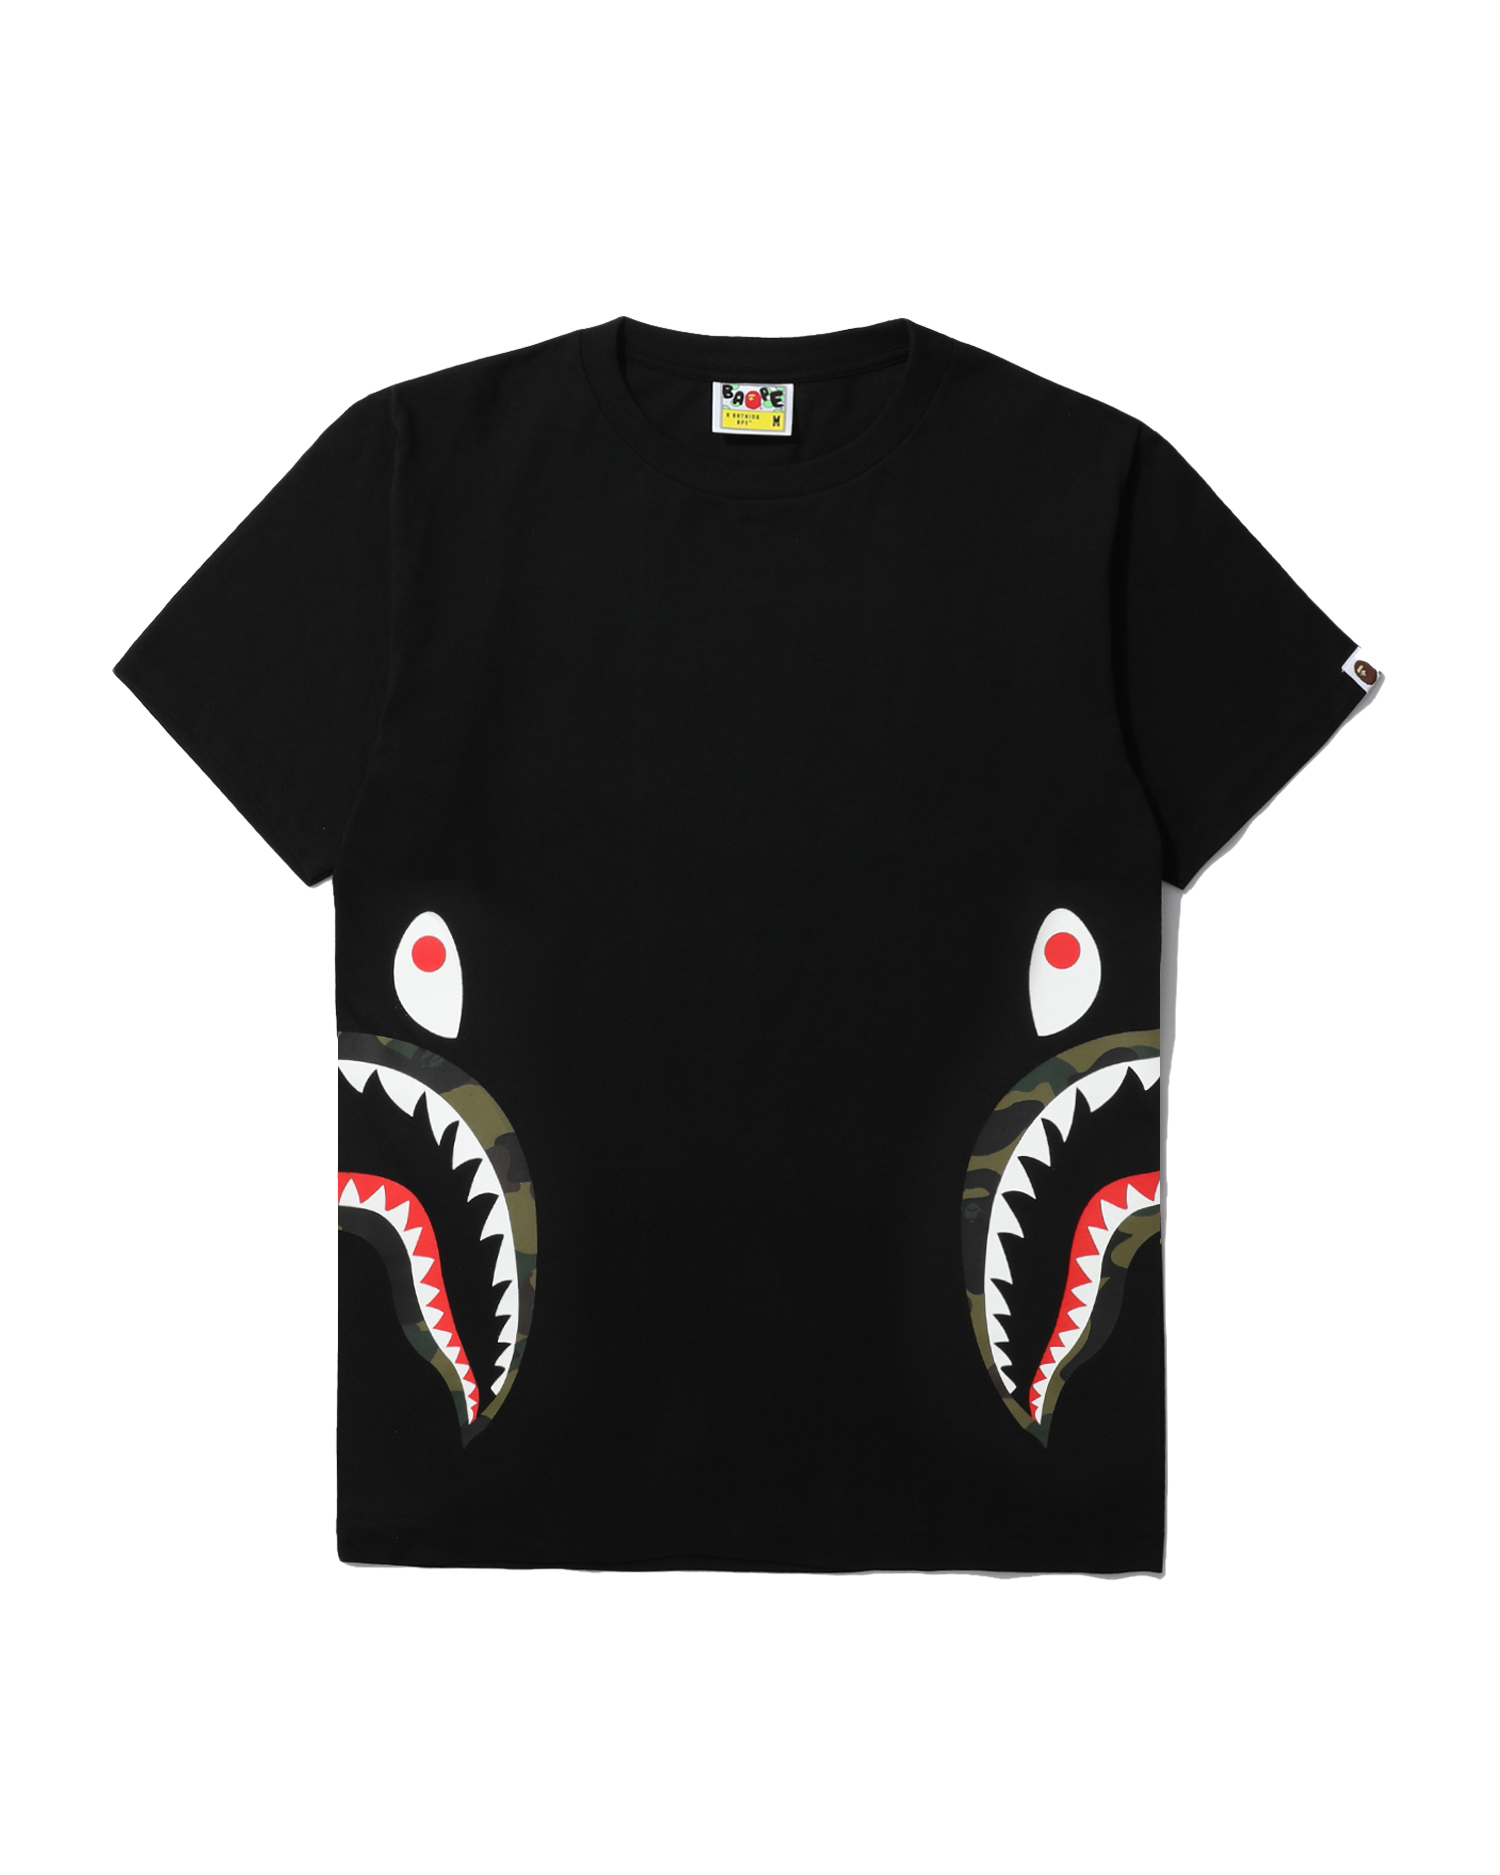 BAPE 1st Camo Side Shark Tee Black/Green - SS19